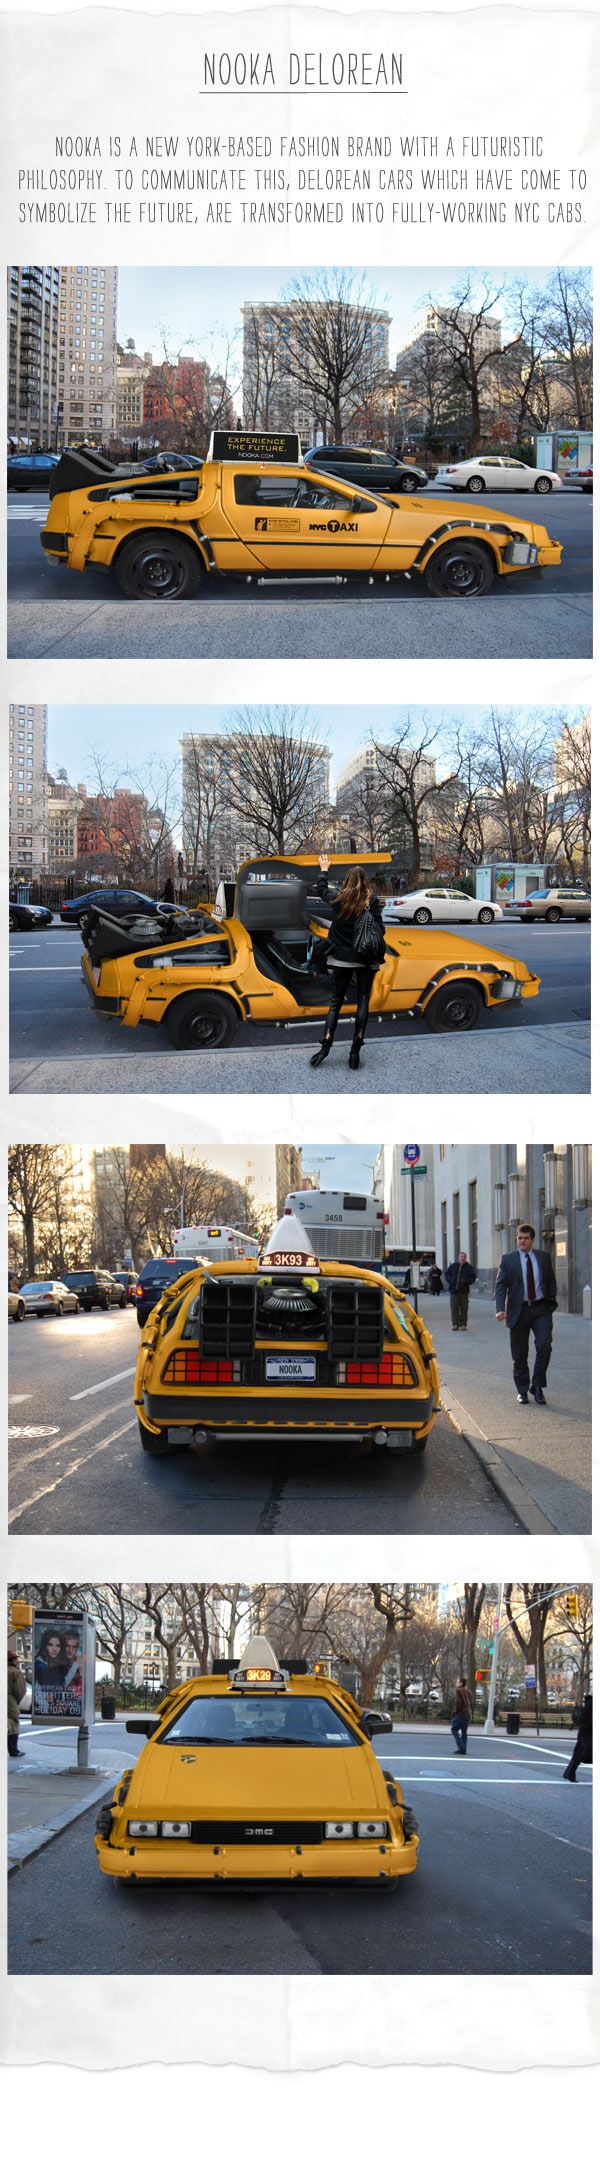 DeLorean Car Becomes The Taxi Of The Future